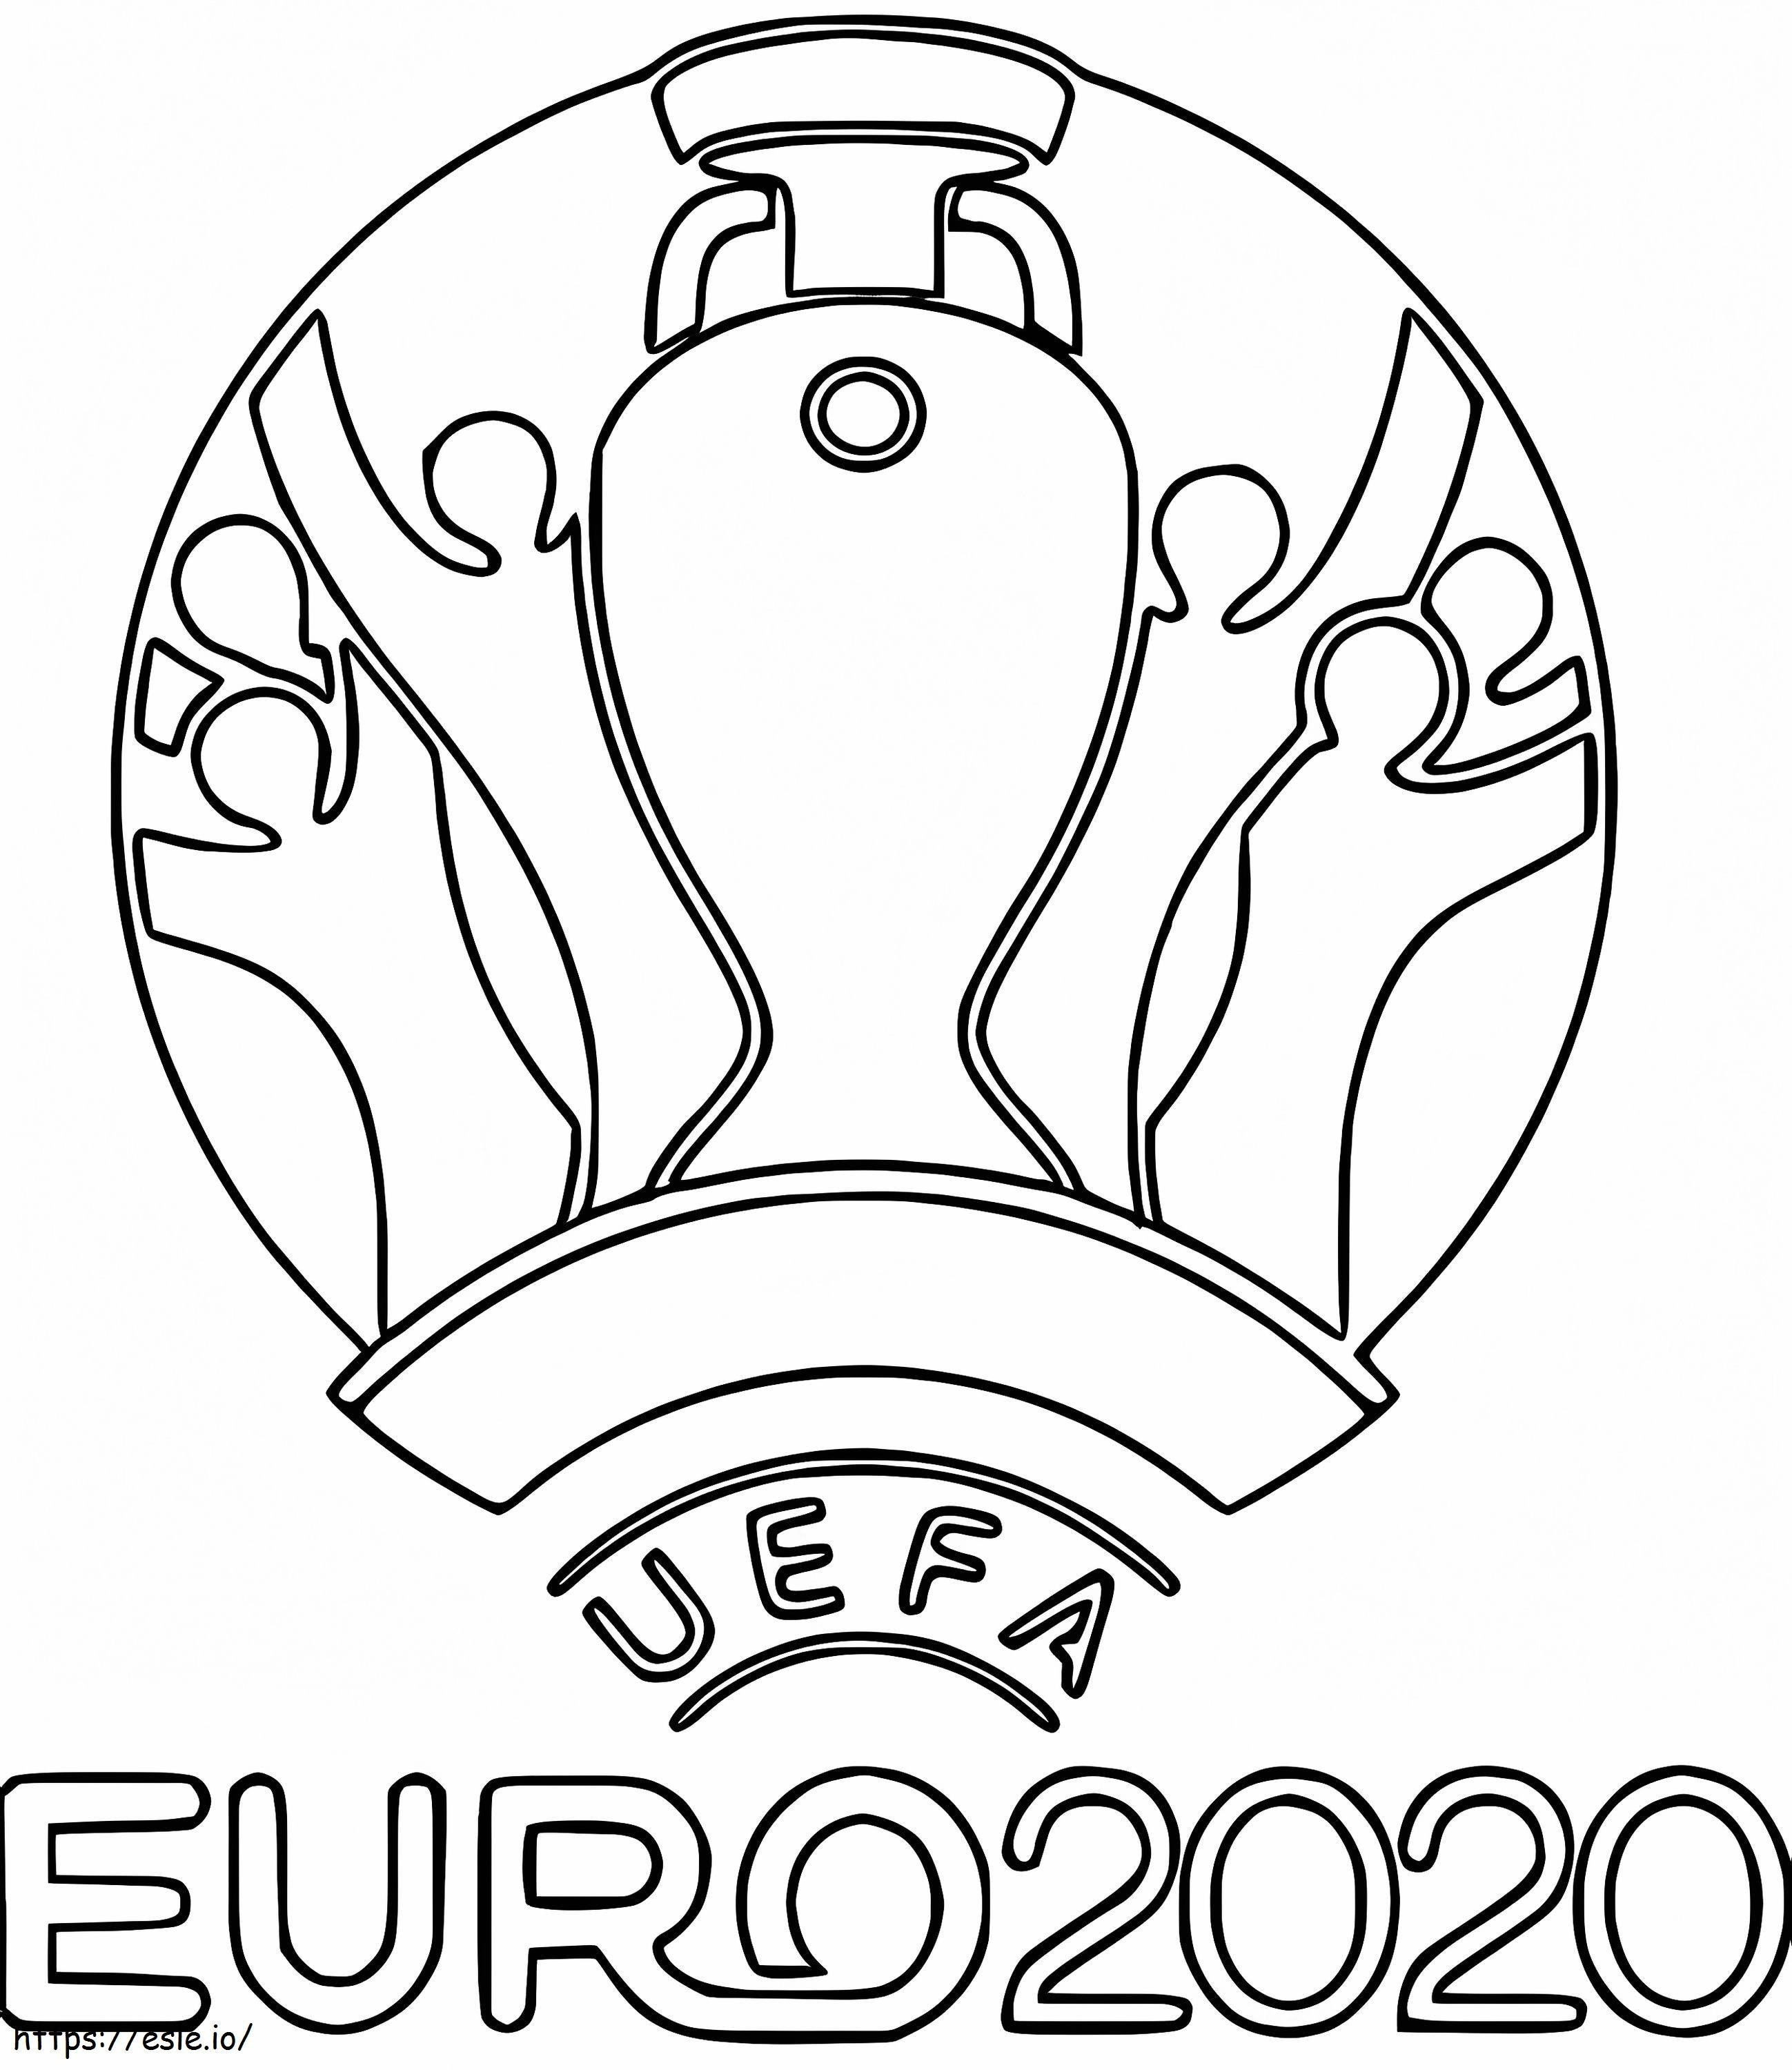 Euro 2020 2021 kolorowanka